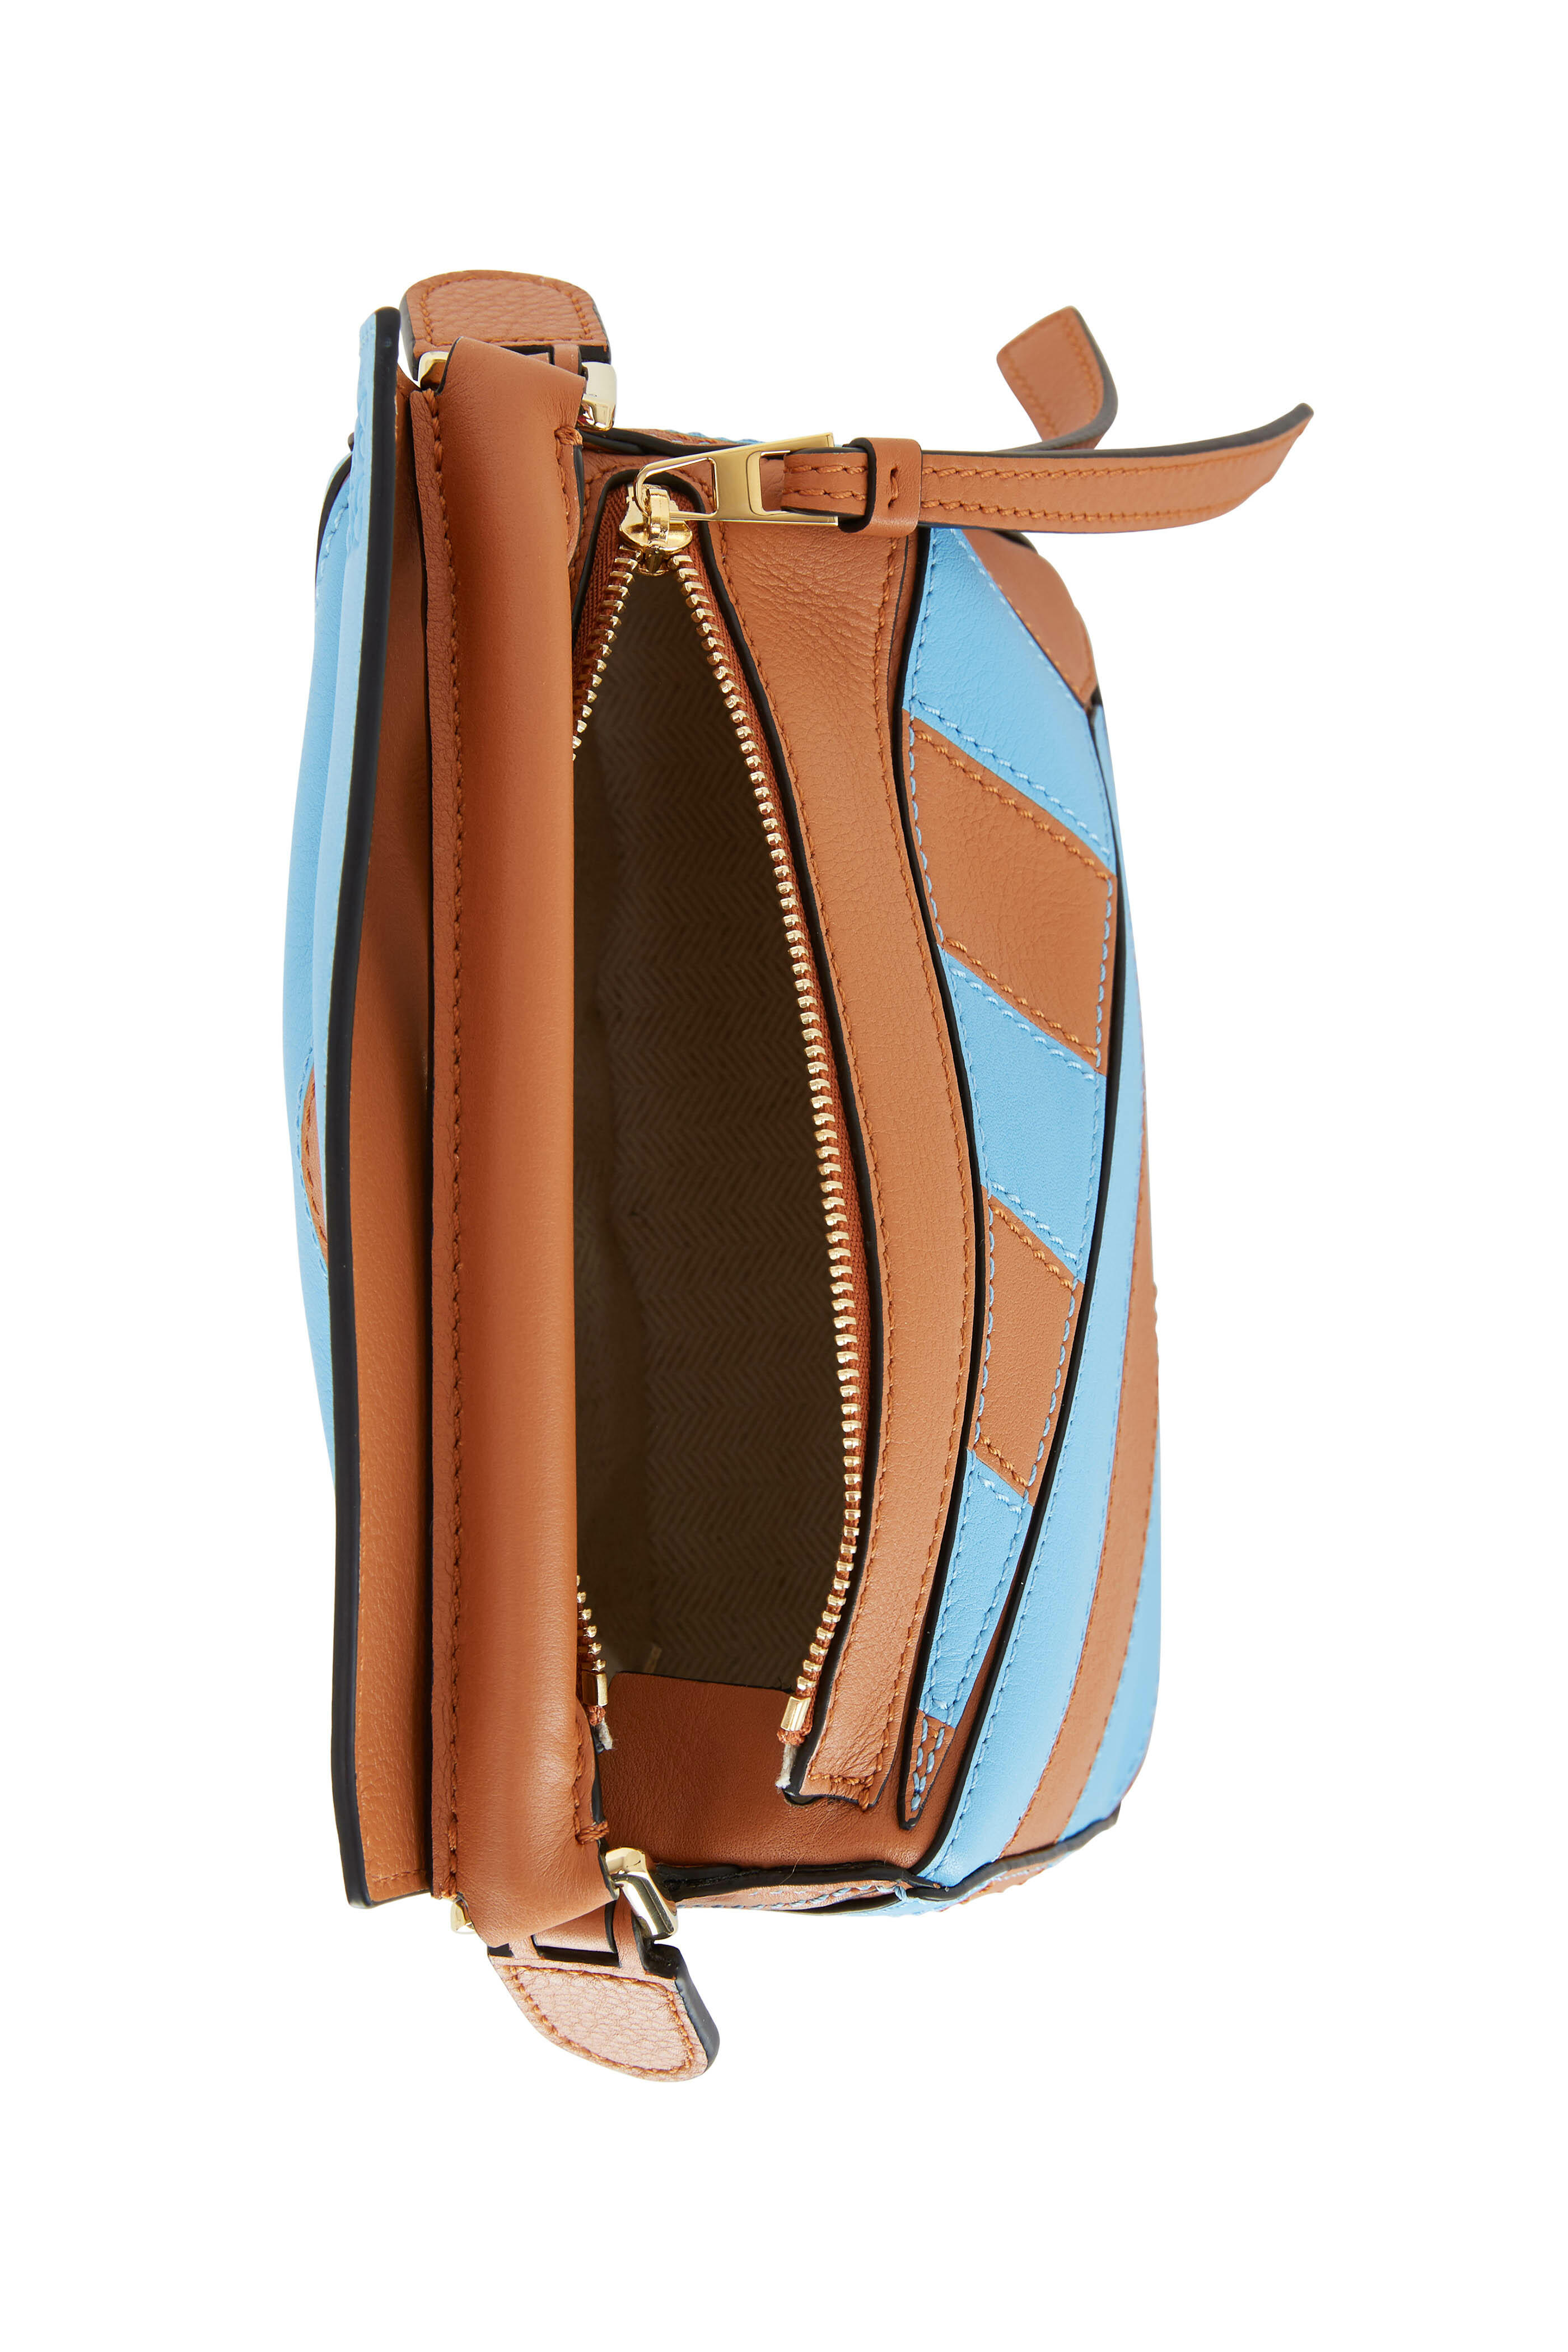 Loewe Goya Small Leather Shoulder Bag - Women - Tan Cross-body Bags